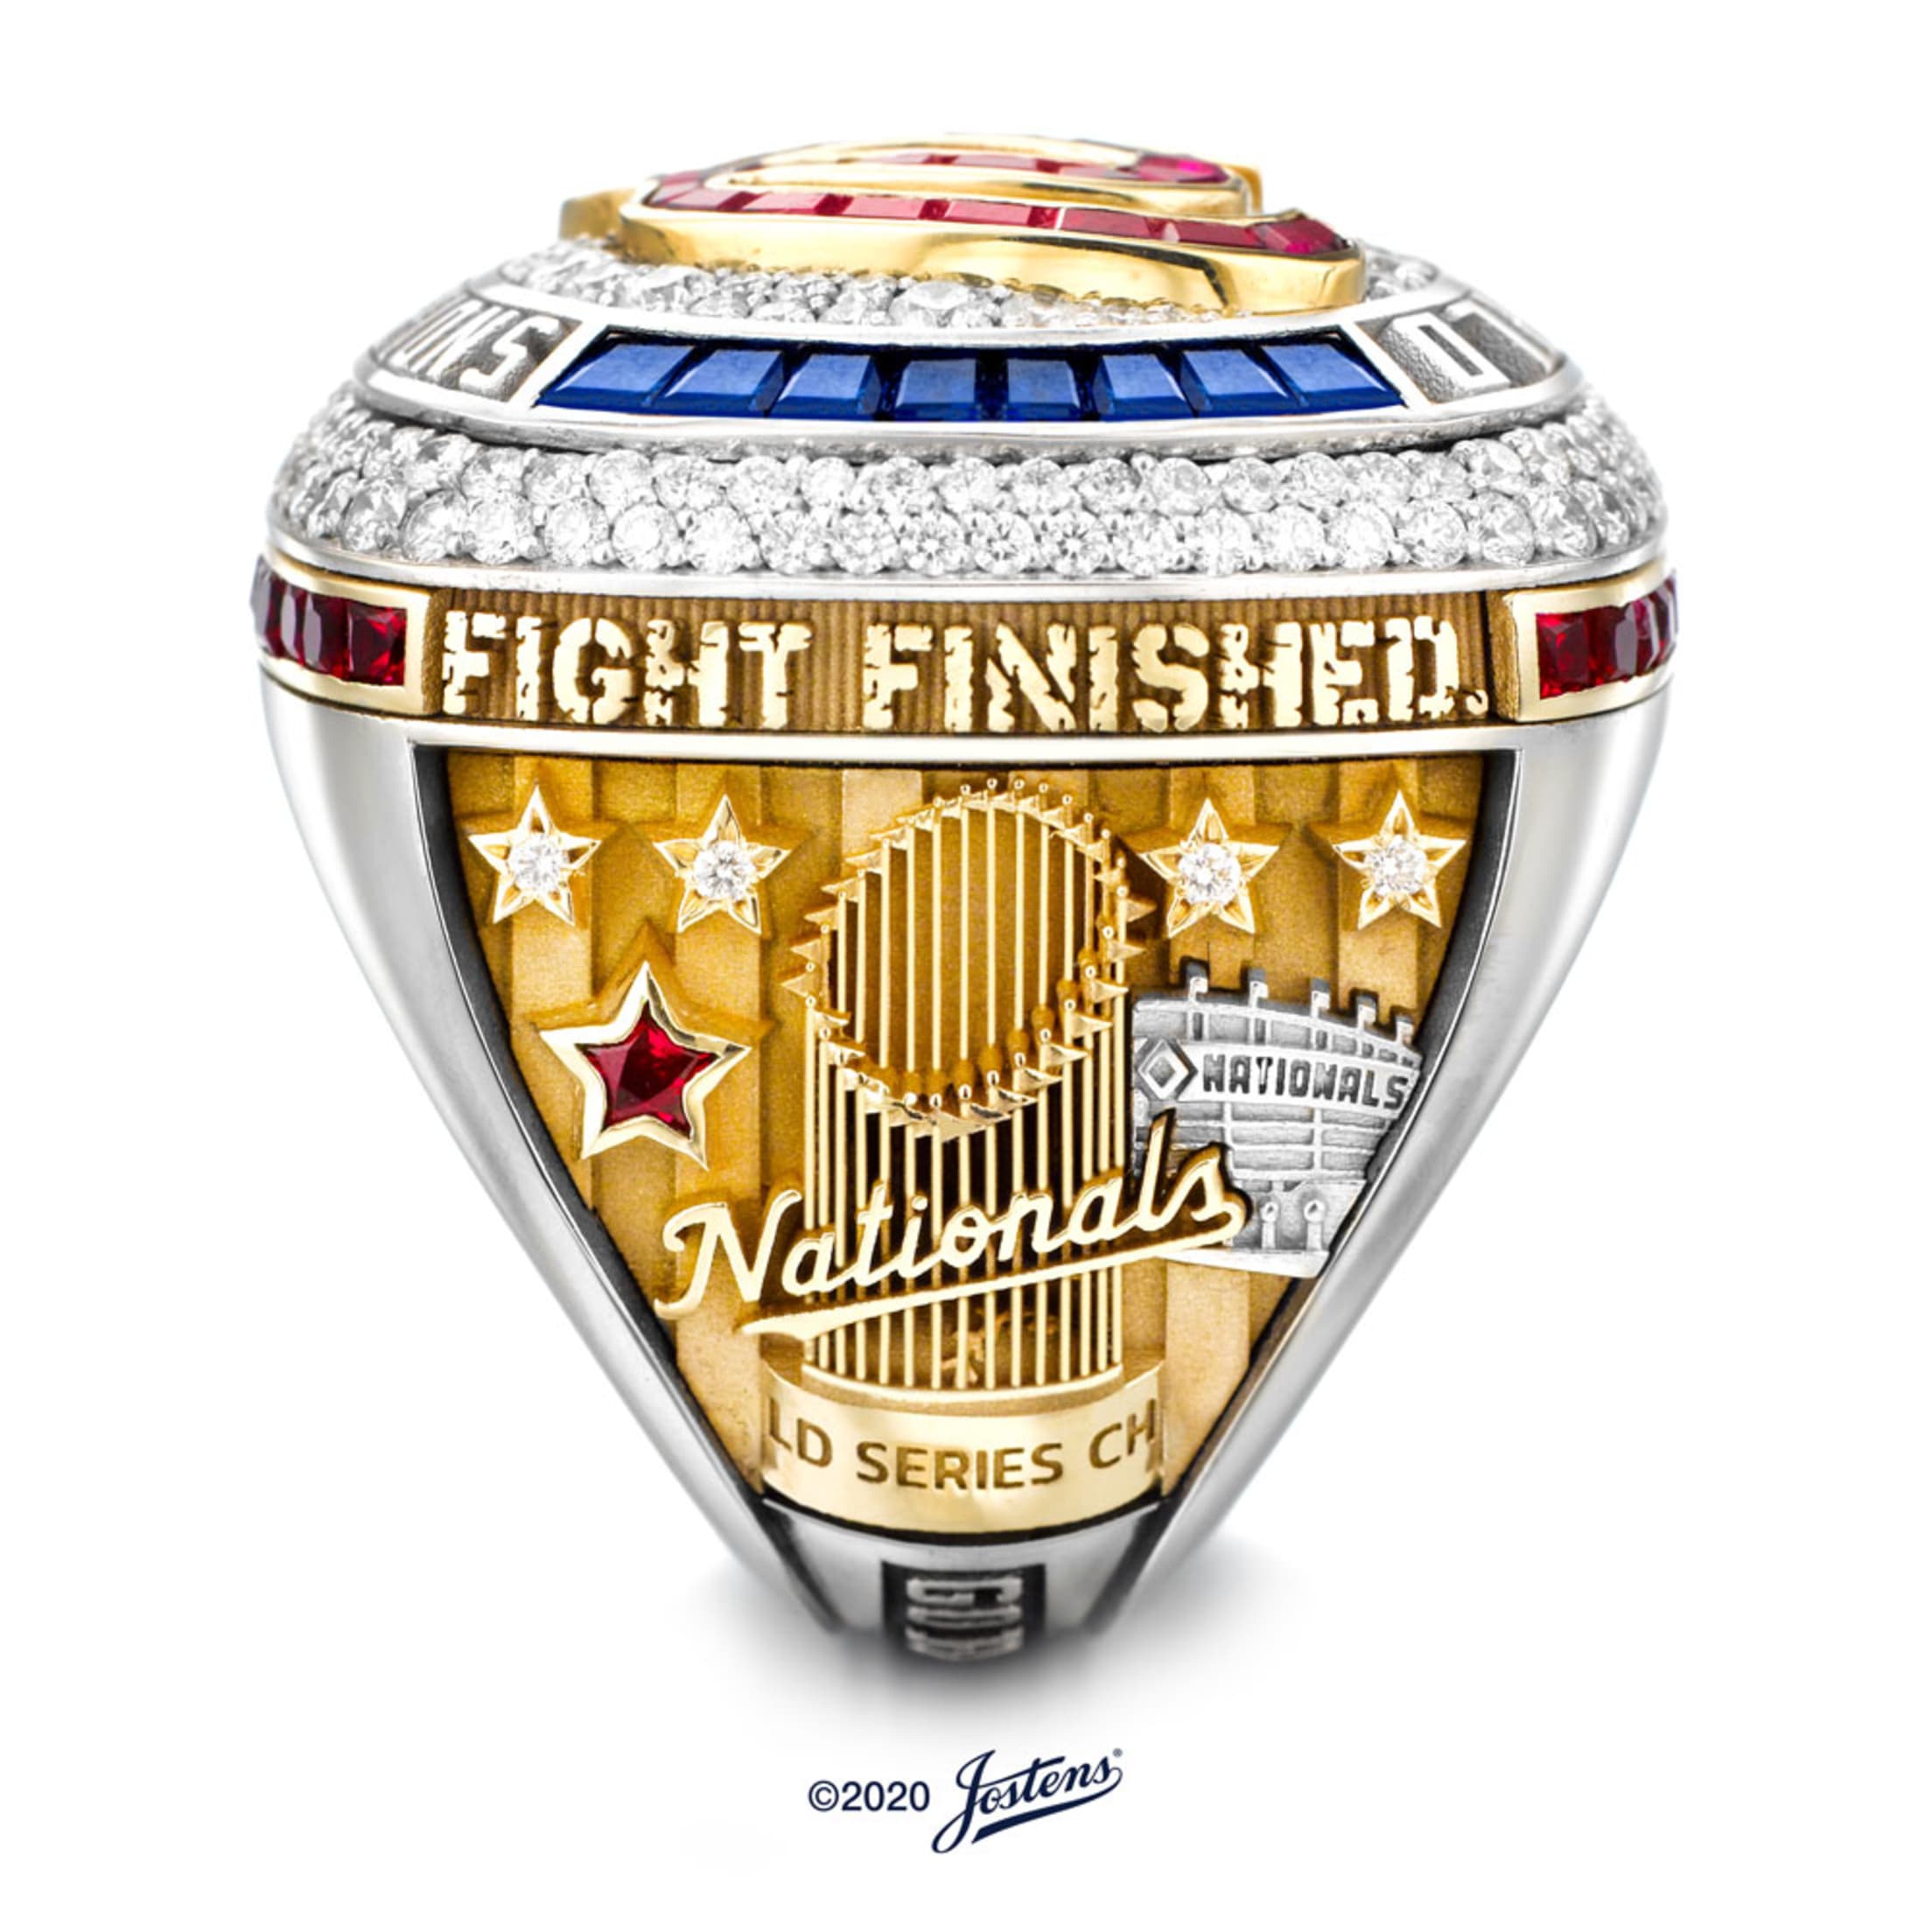 2019 Washington Nationals World Series Championship Ring - Mik Shop